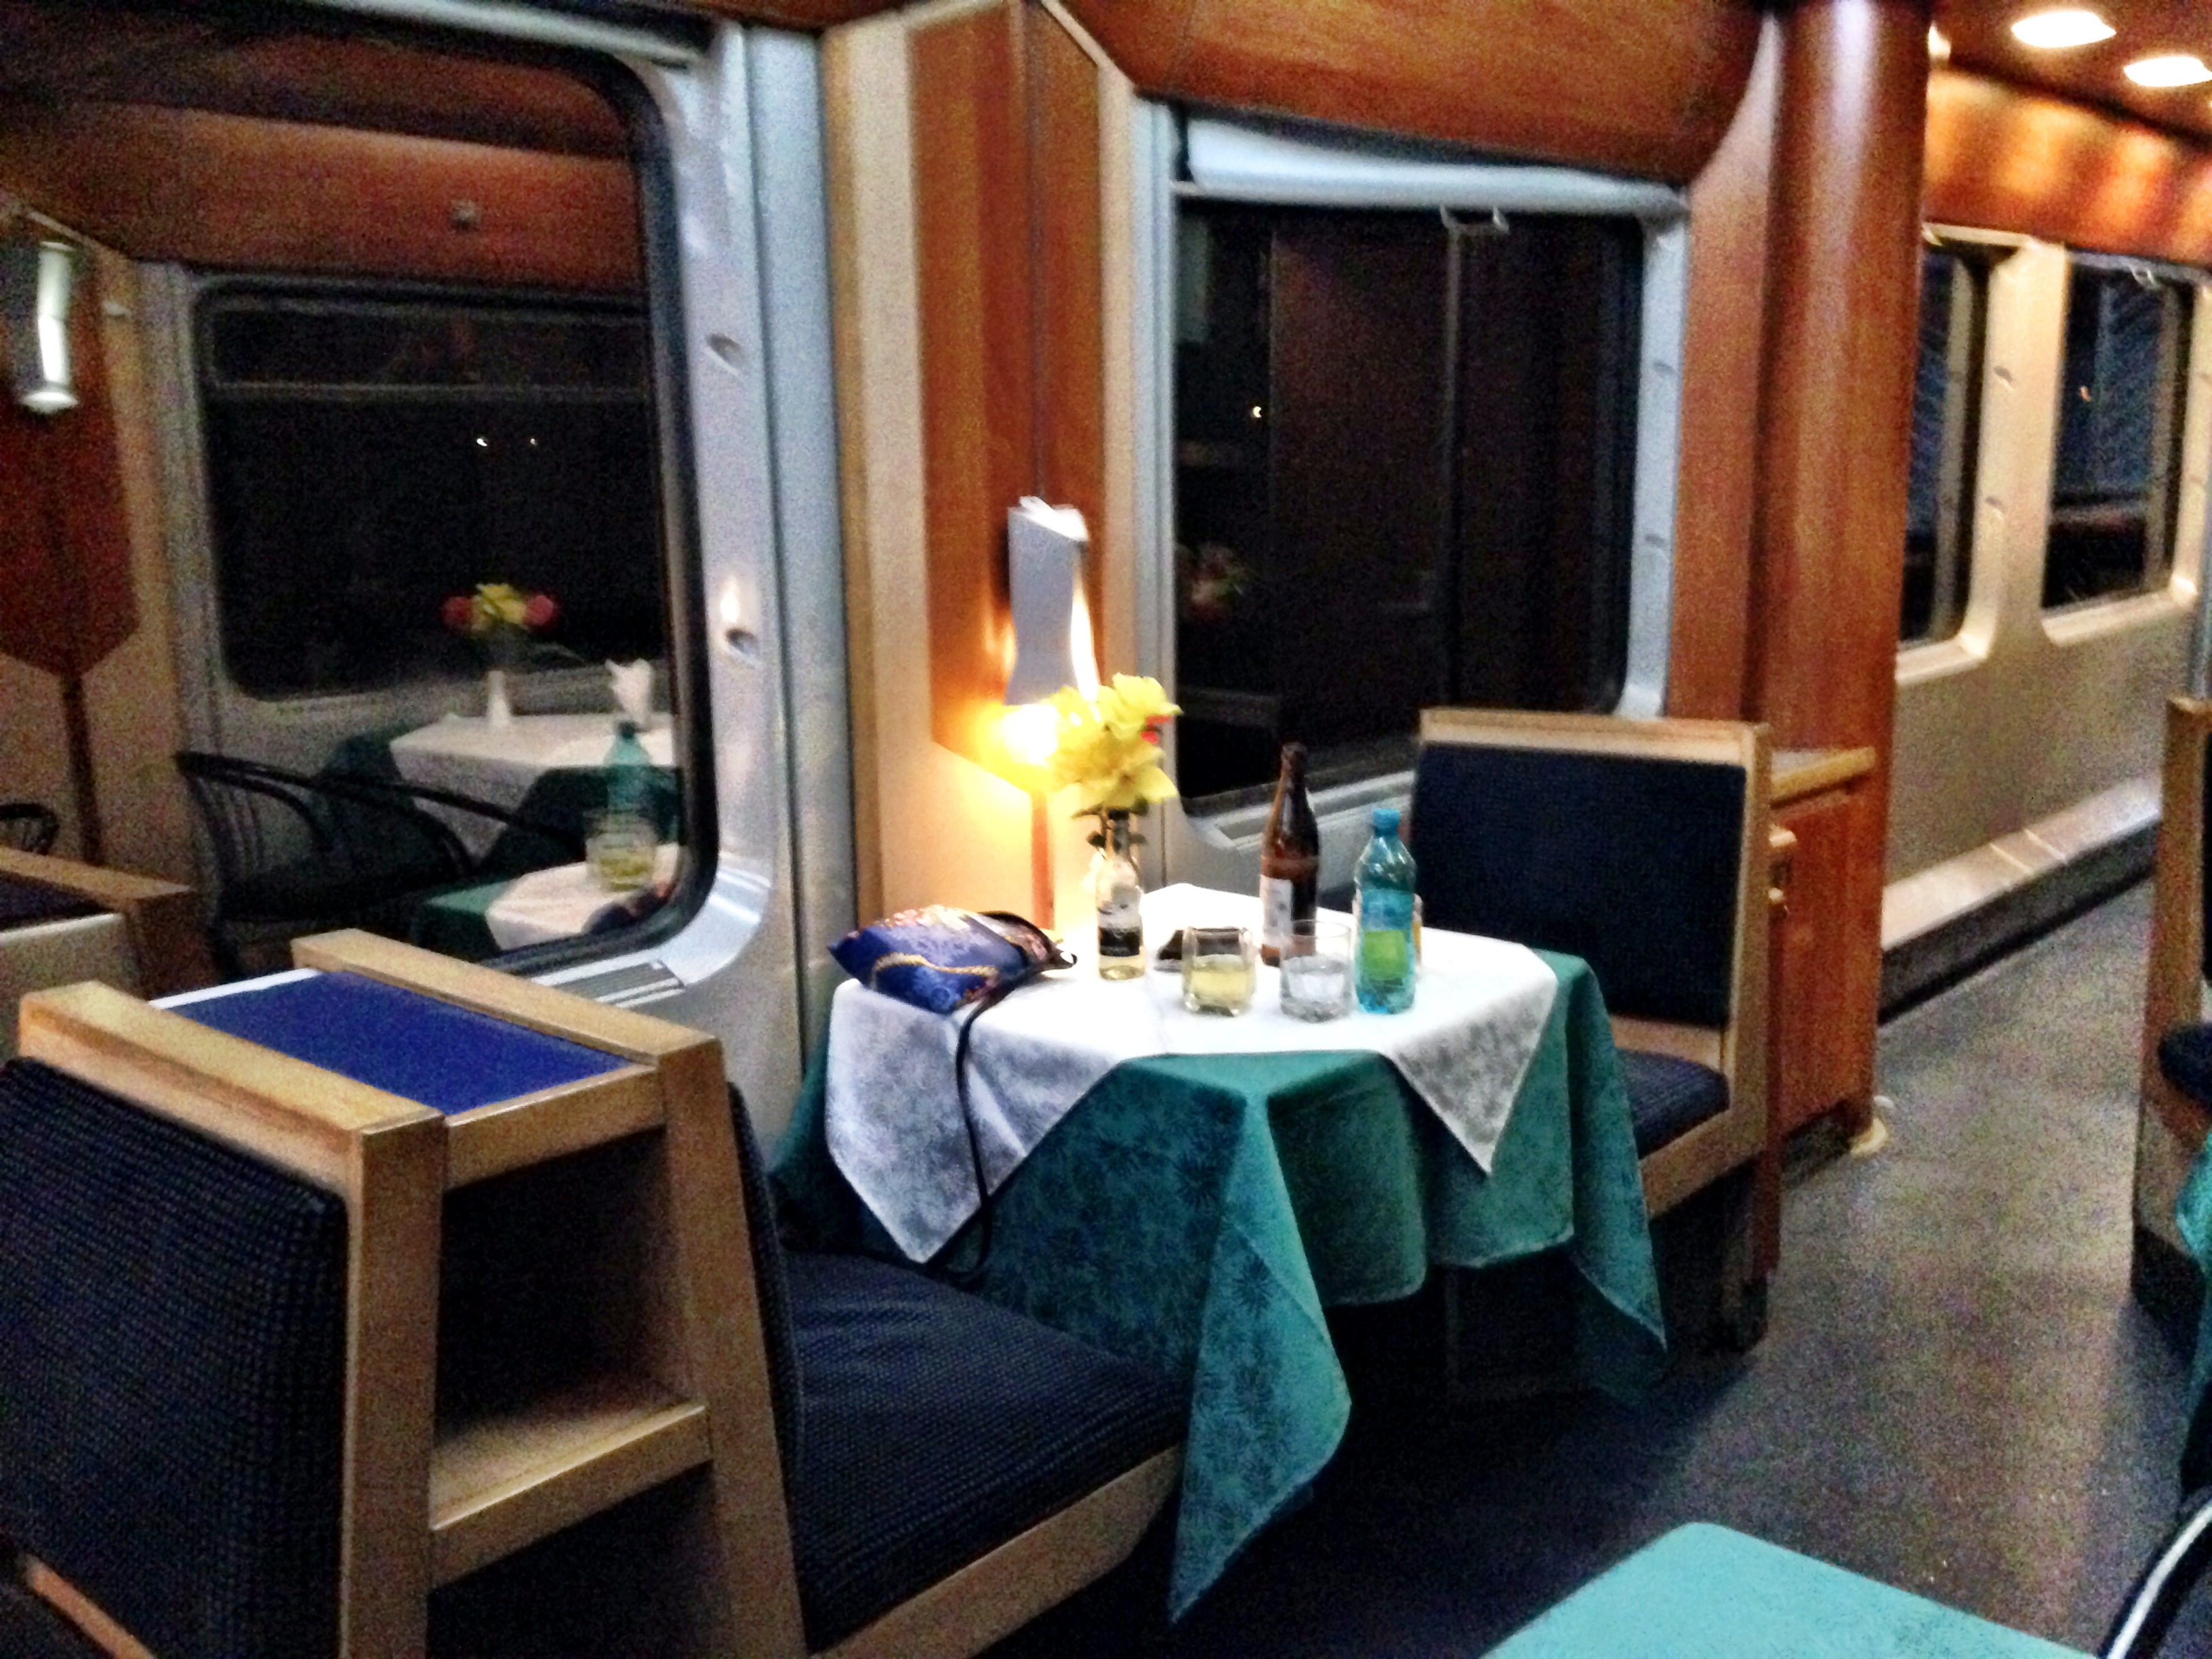 night train from budapest to bucharest